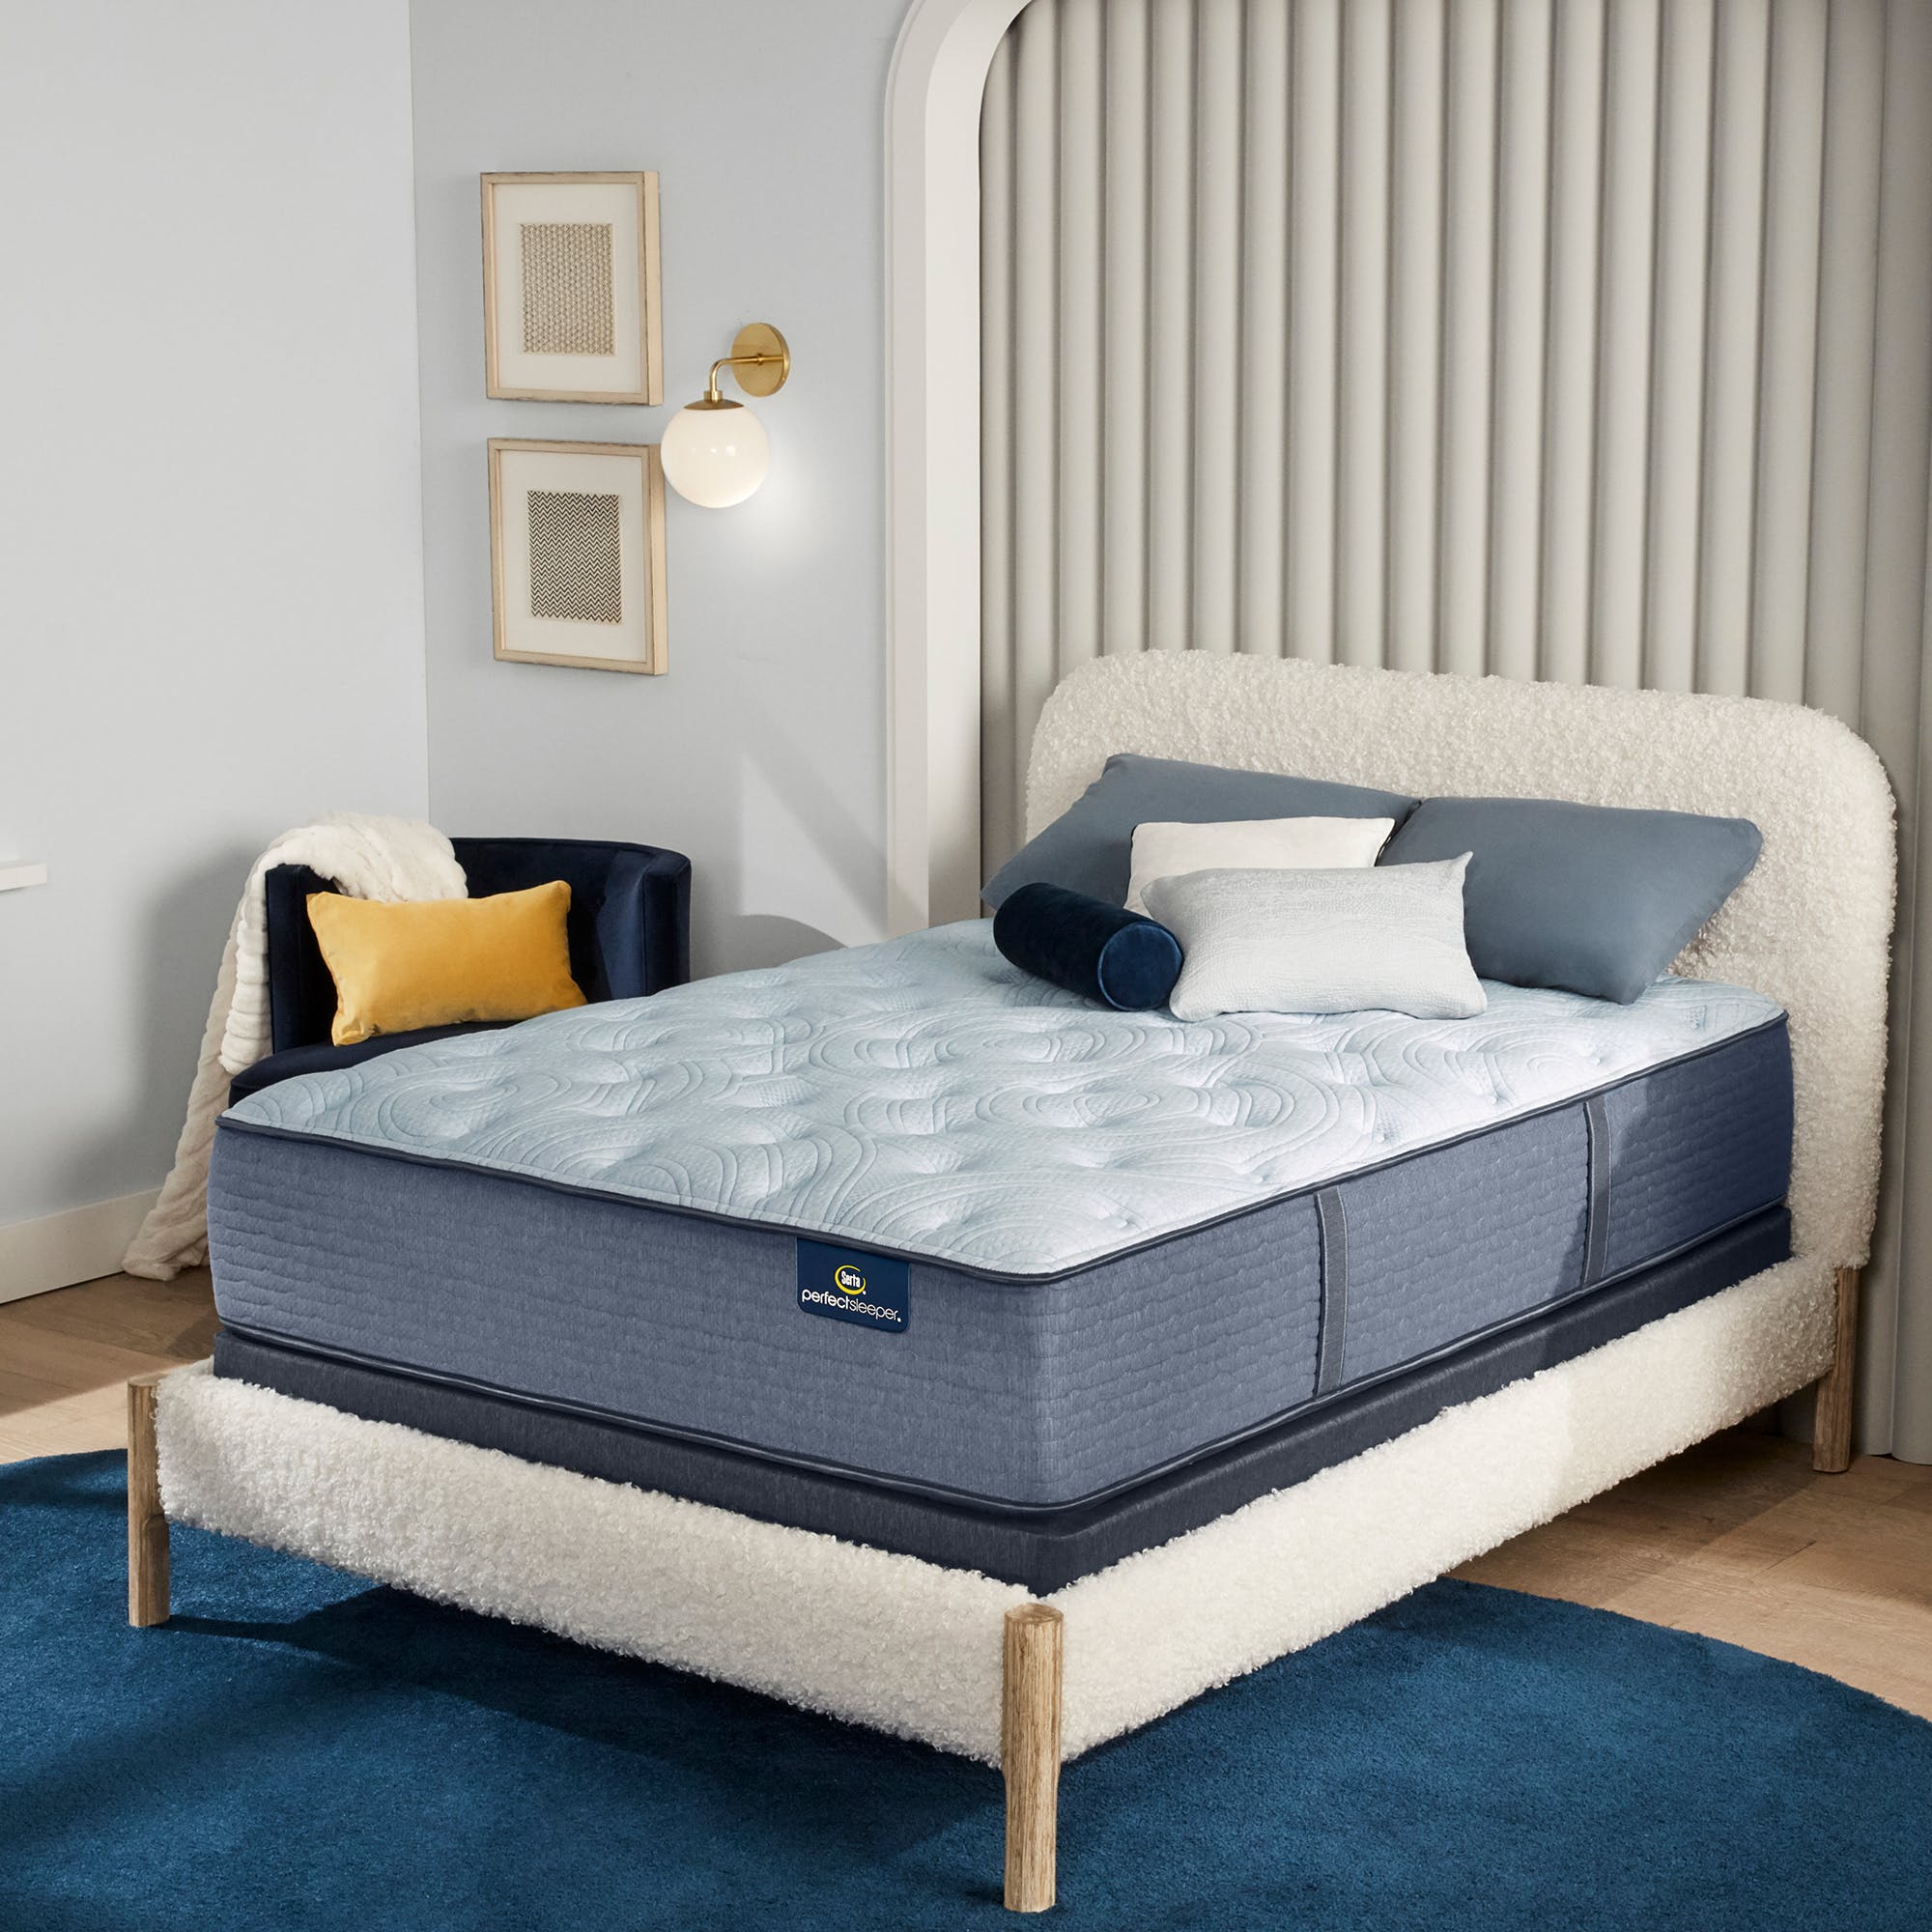 Serta Perfect Sleeper Renewed Sleep Plush Ross Furniture Company